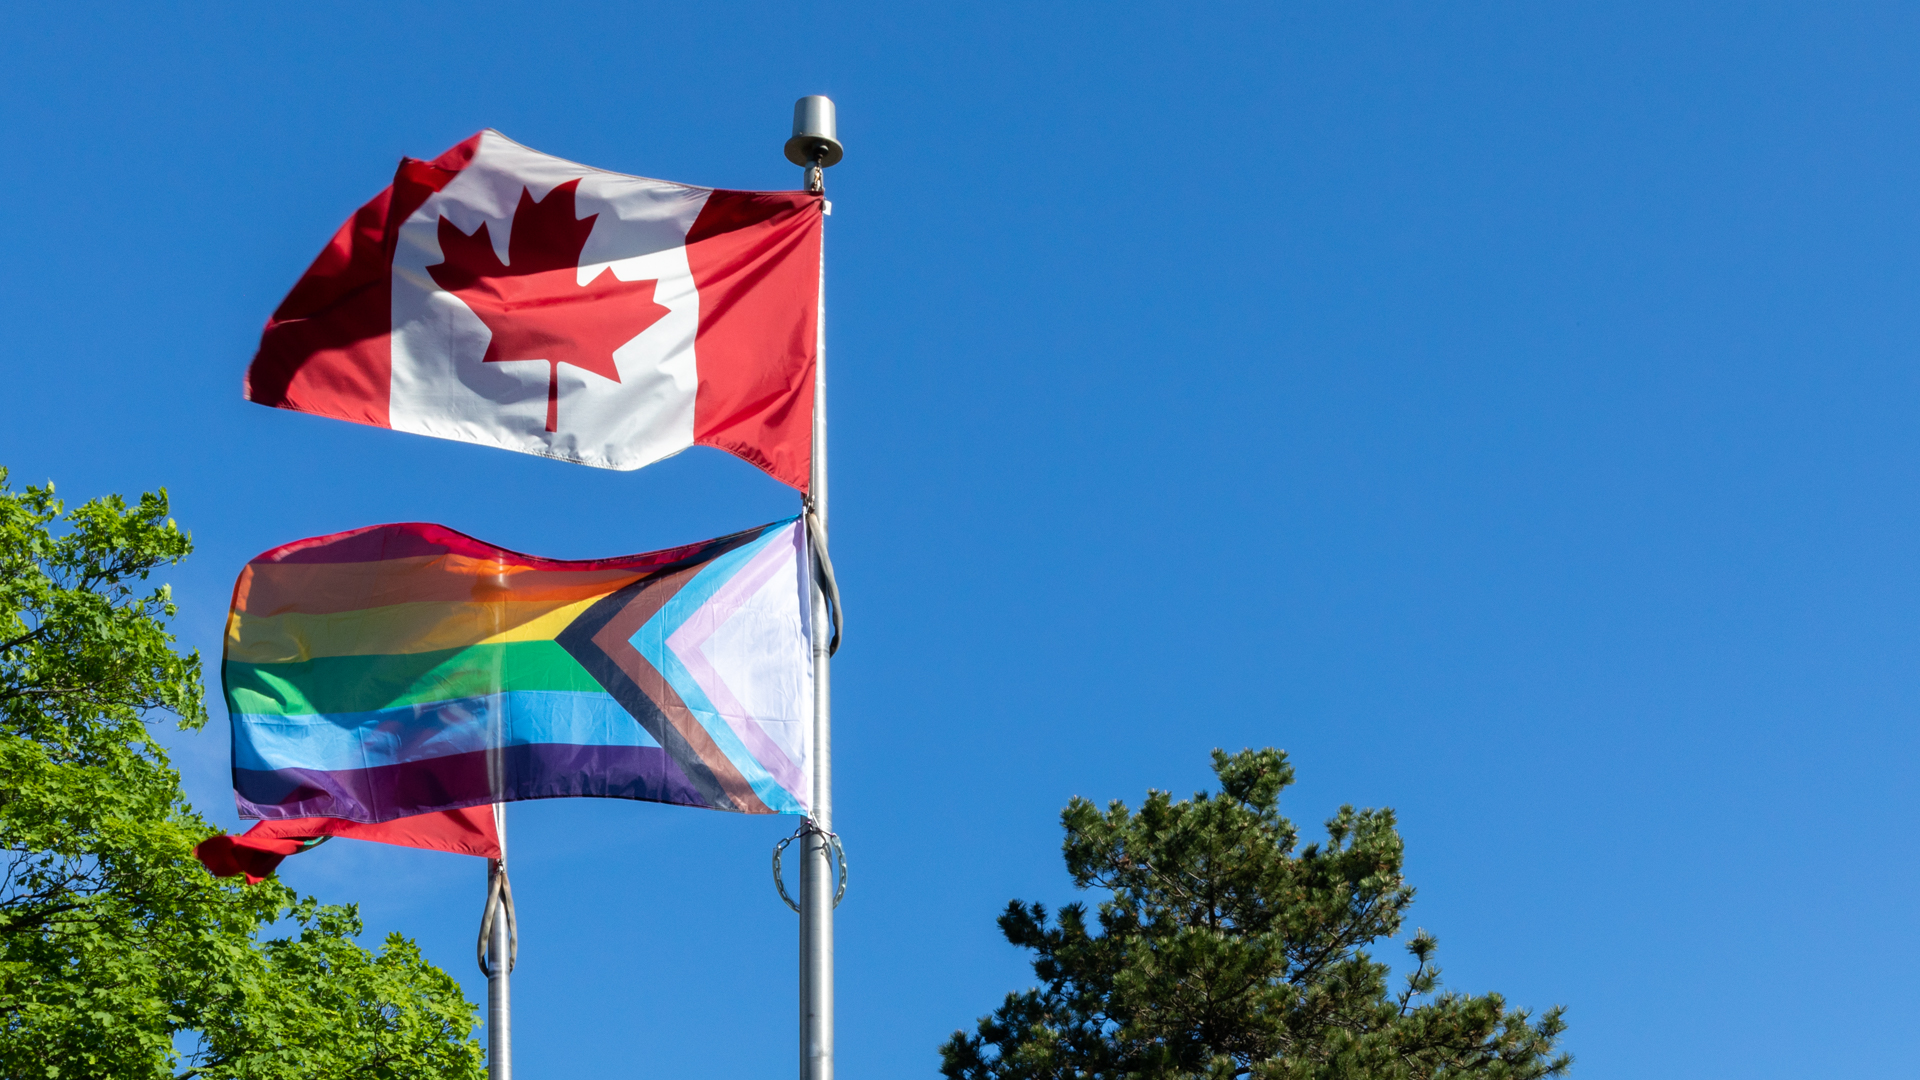 Progress Pride flag flies beneath the Canadian flag on a flag pole.